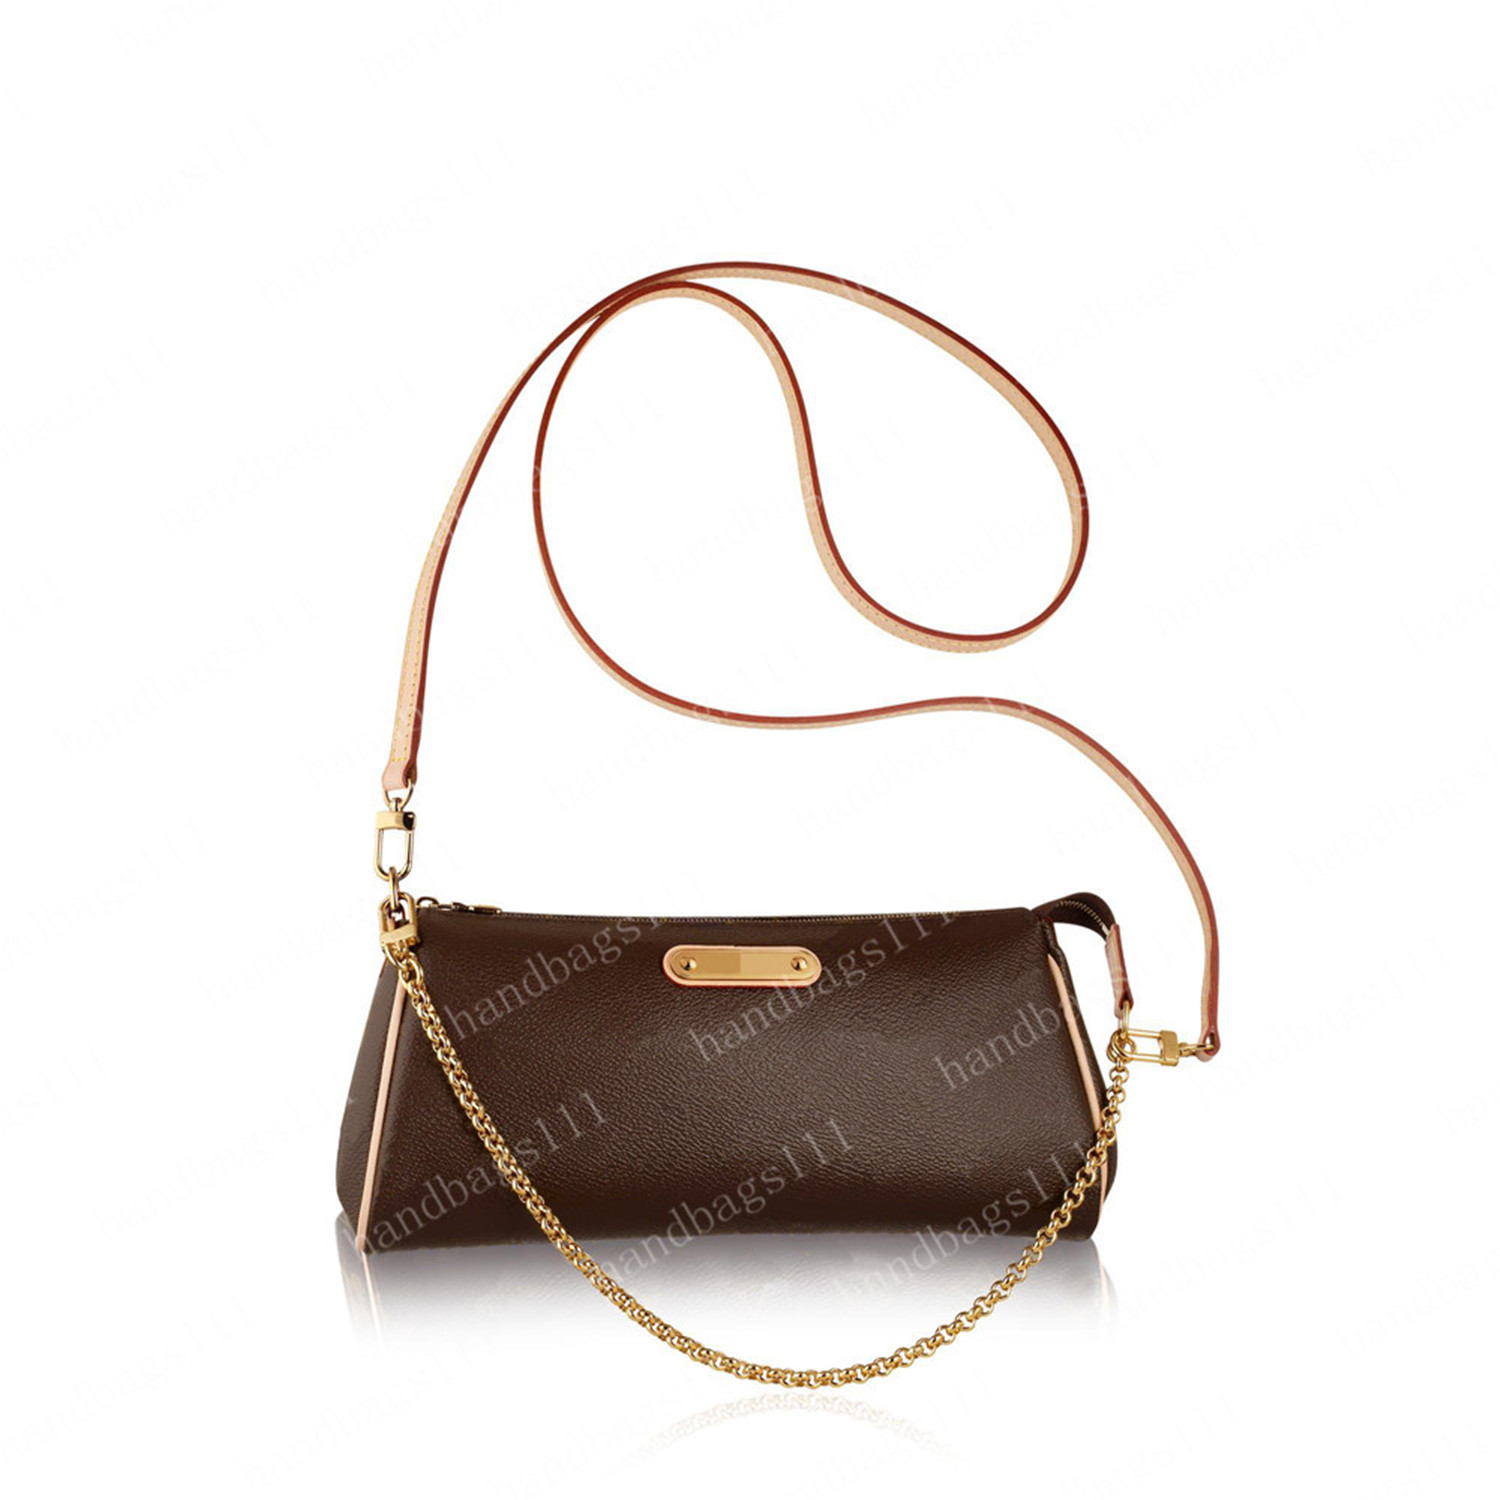 

Shoulder Bag Women Handbag Clutch Bags Toiletry Pouch Handbags Purse Wallets Card Holder Fashion Wallet Chain Key Pouch 546-31, #1 brown